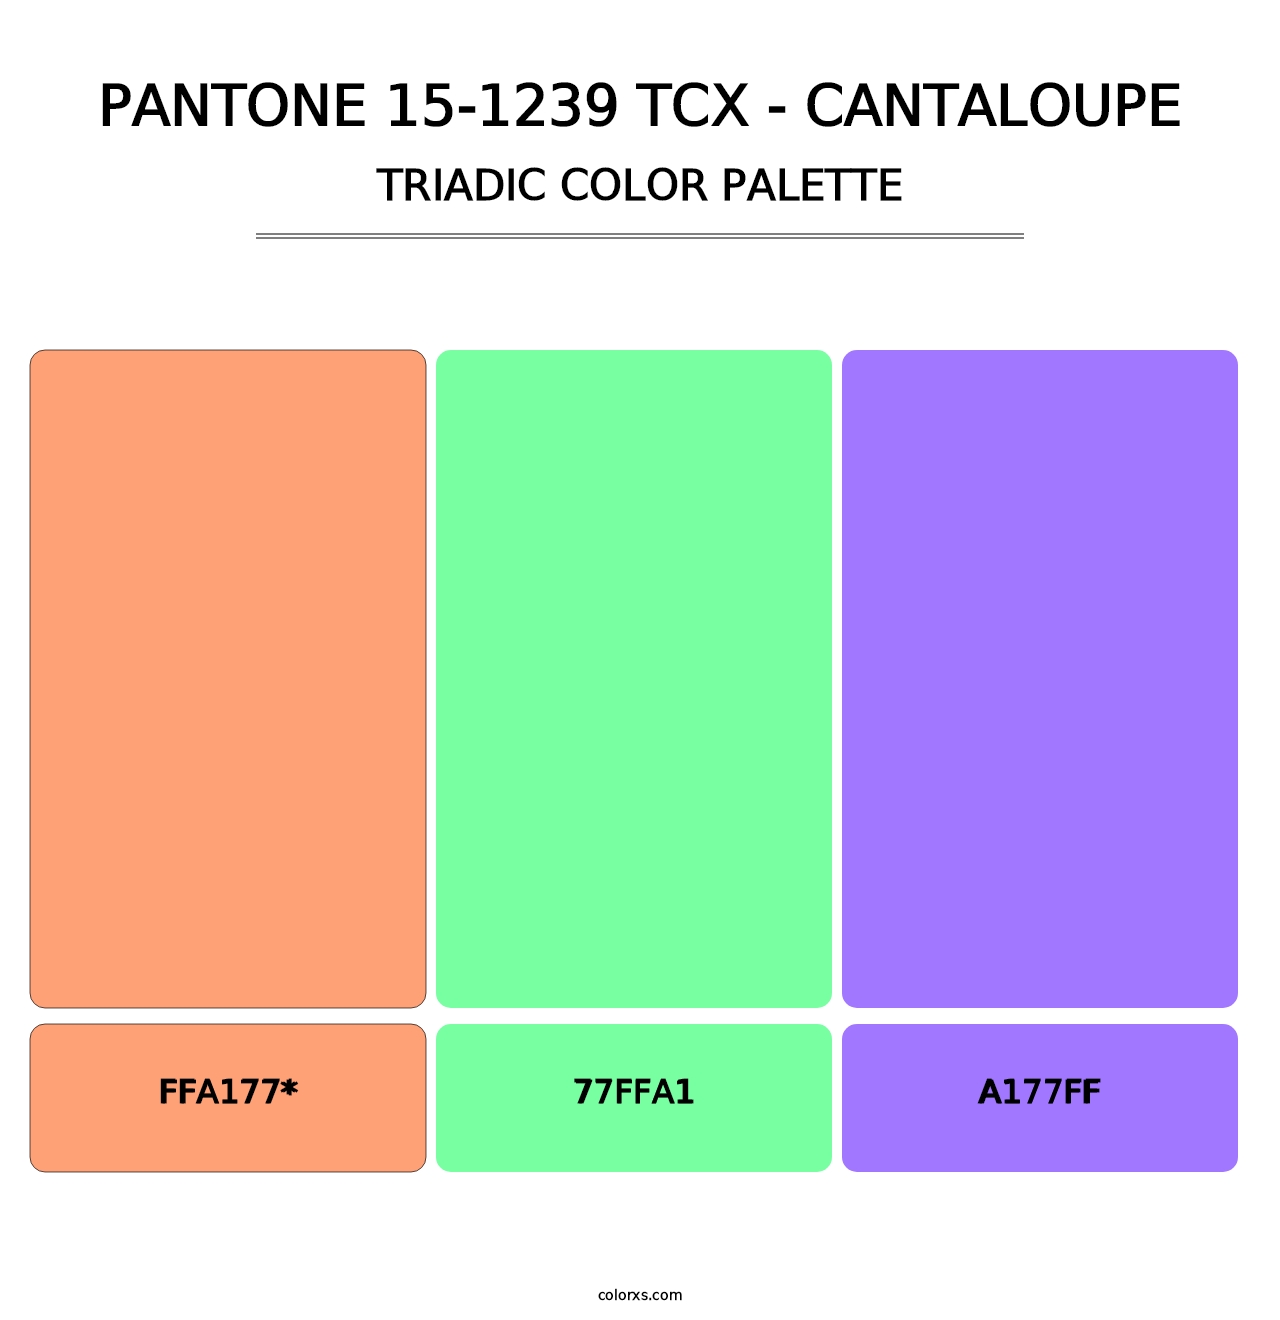 PANTONE 15-1239 TCX - Cantaloupe - Triadic Color Palette